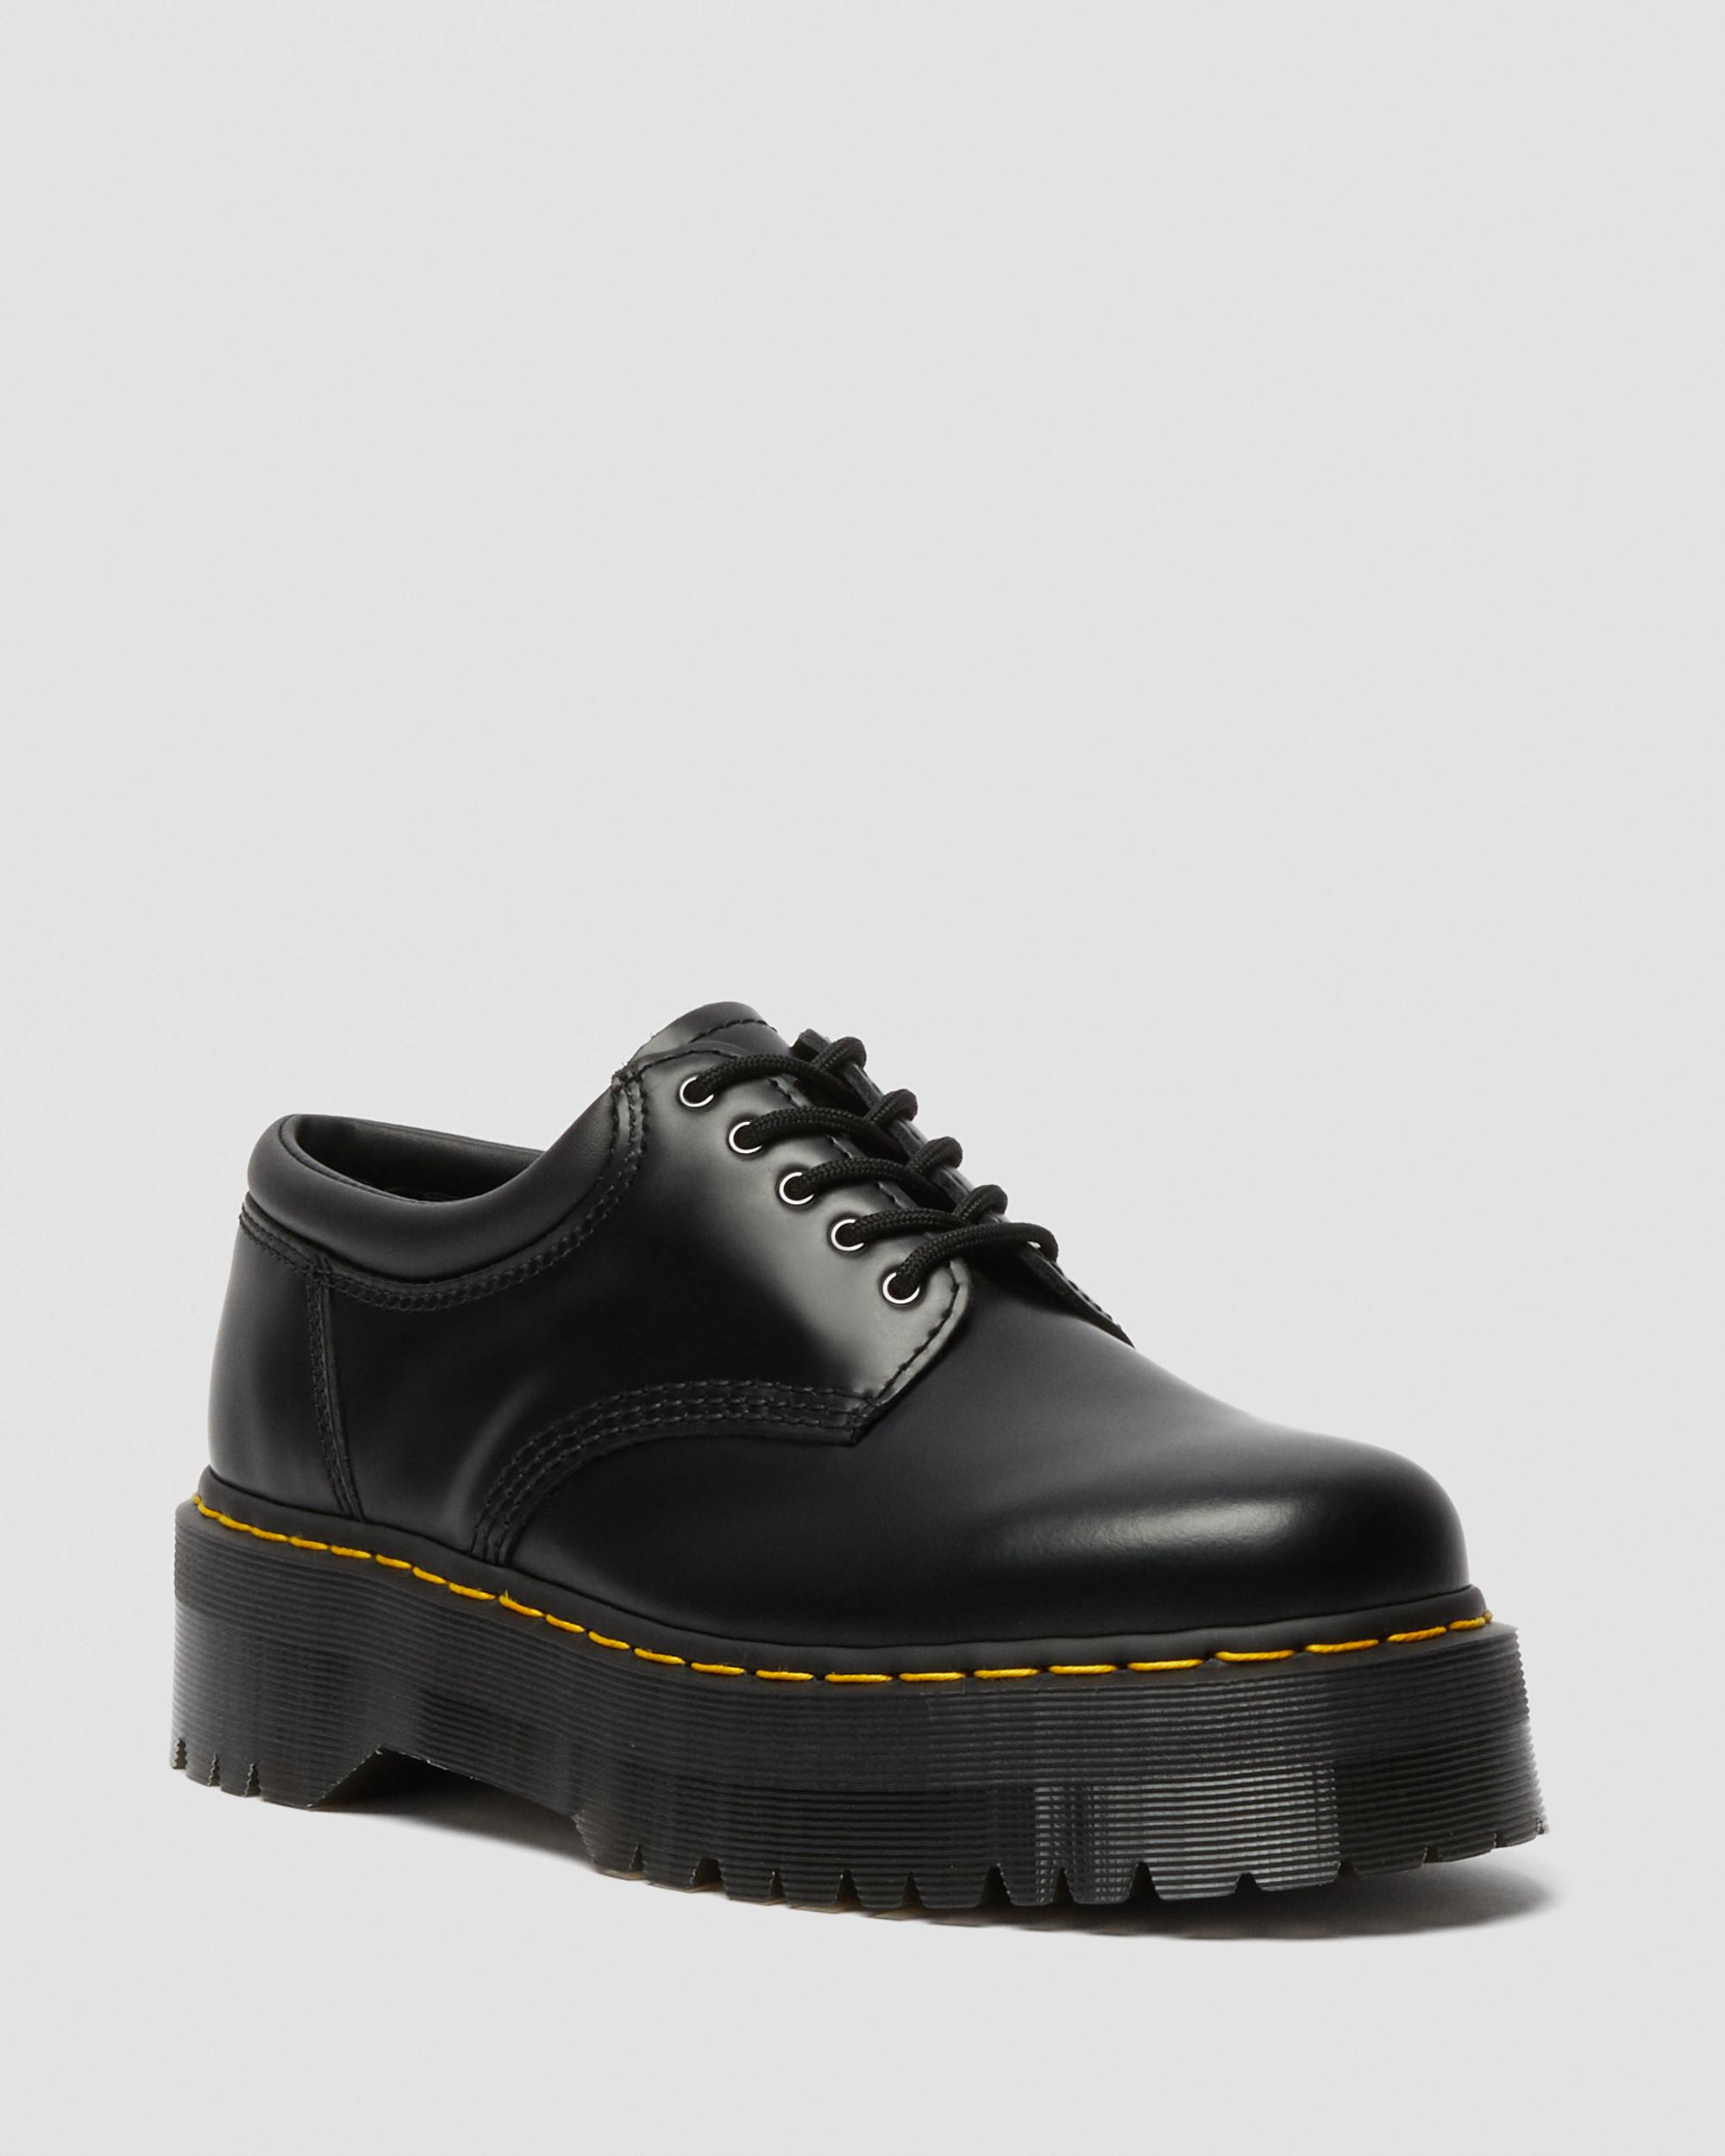 Dr. Martens, Shoes, Dr Martens Louis Style Black Leather Slip On Loafer  Shoes Mens Size 8